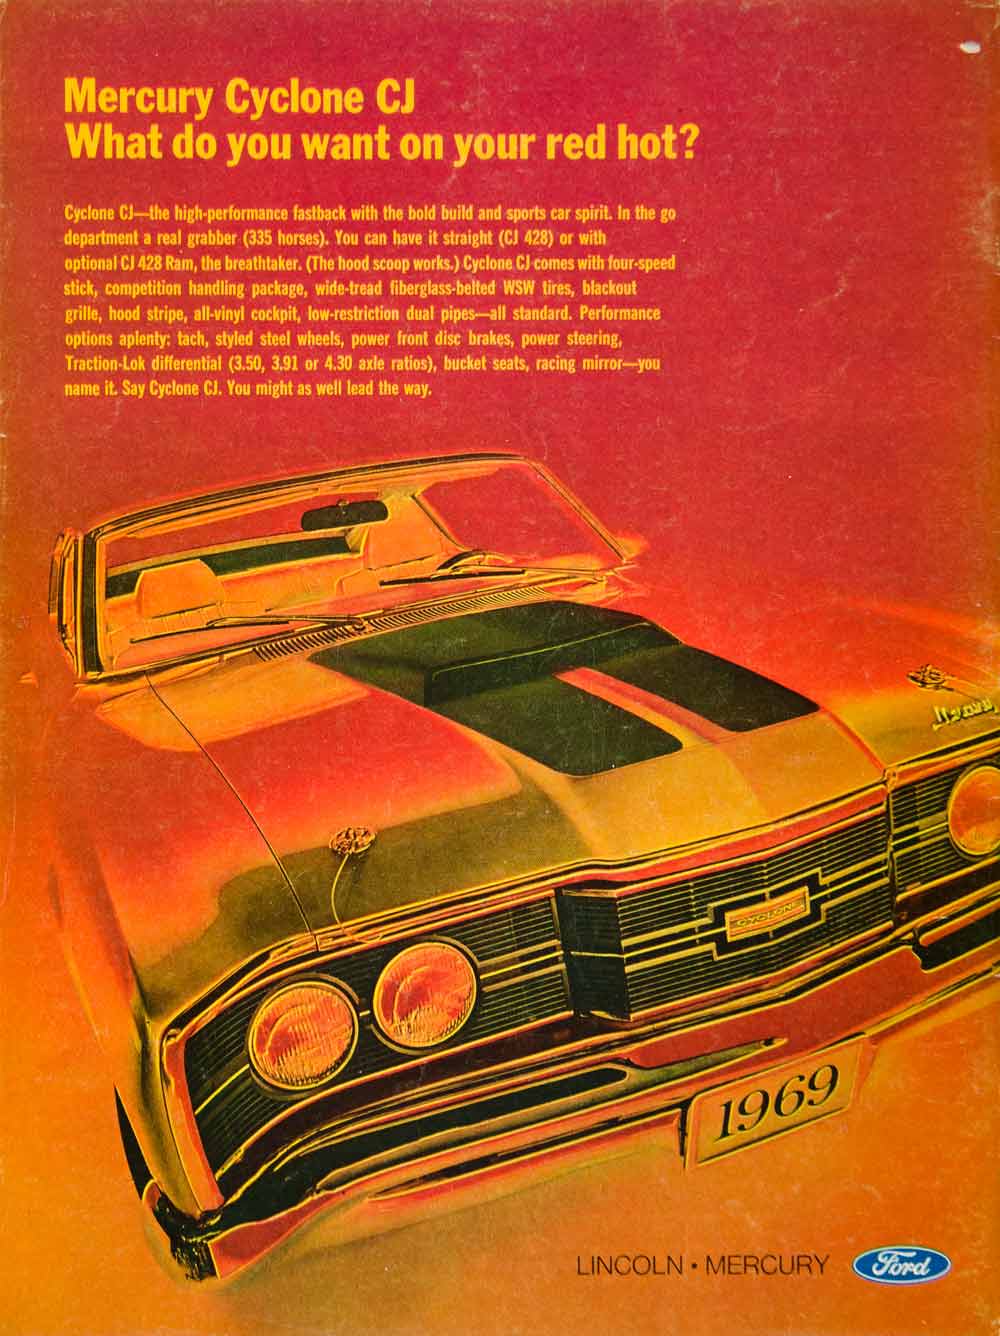 1969 Ad Ford Lincoln Mercury Cyclone CJ 2 Door Fastback Muscle Car 428 V8 YCD7